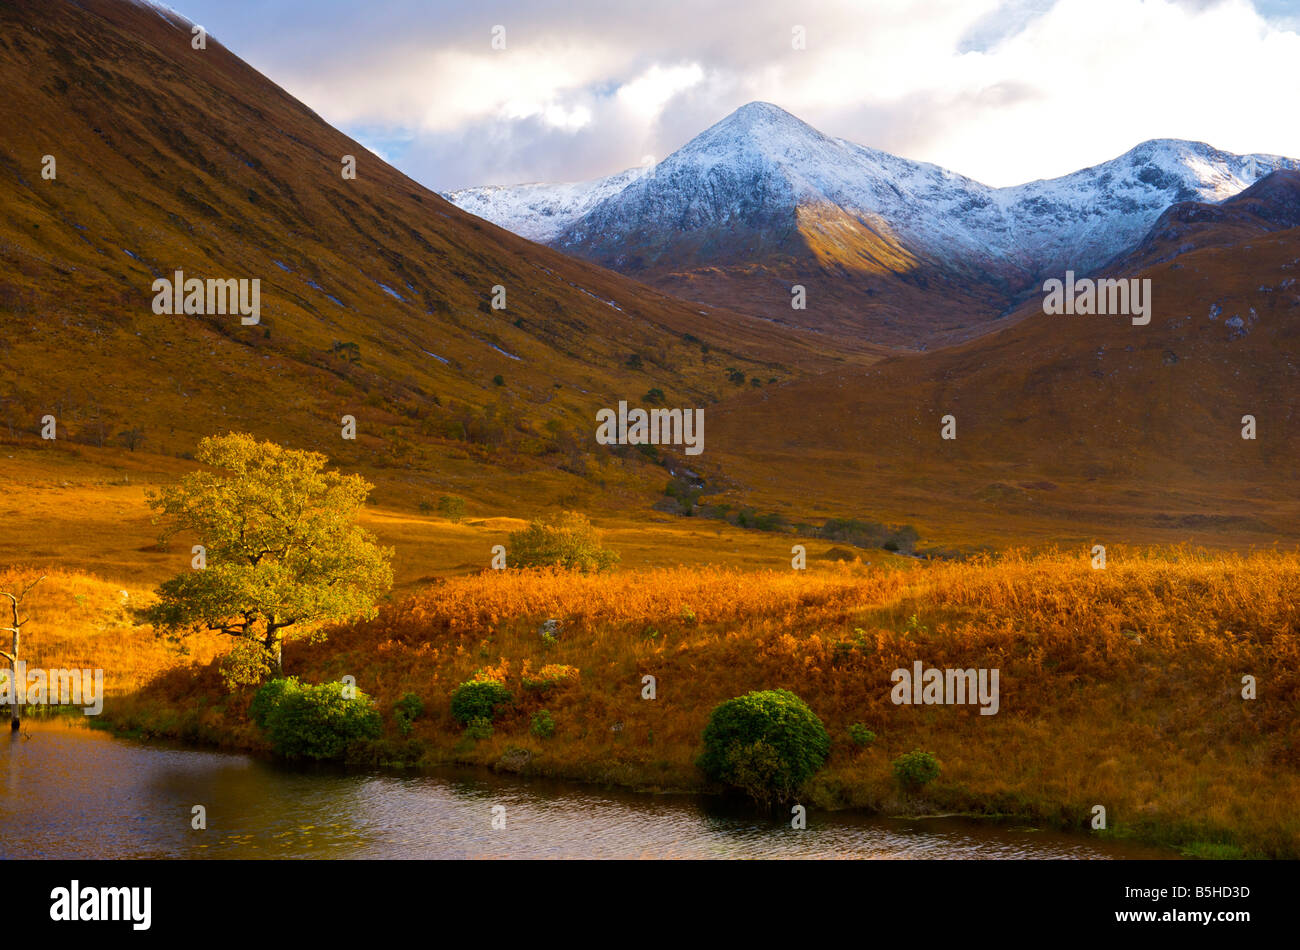 Single tree against a dramatic snowy mountain glen etive scottish highlands Stock Photo